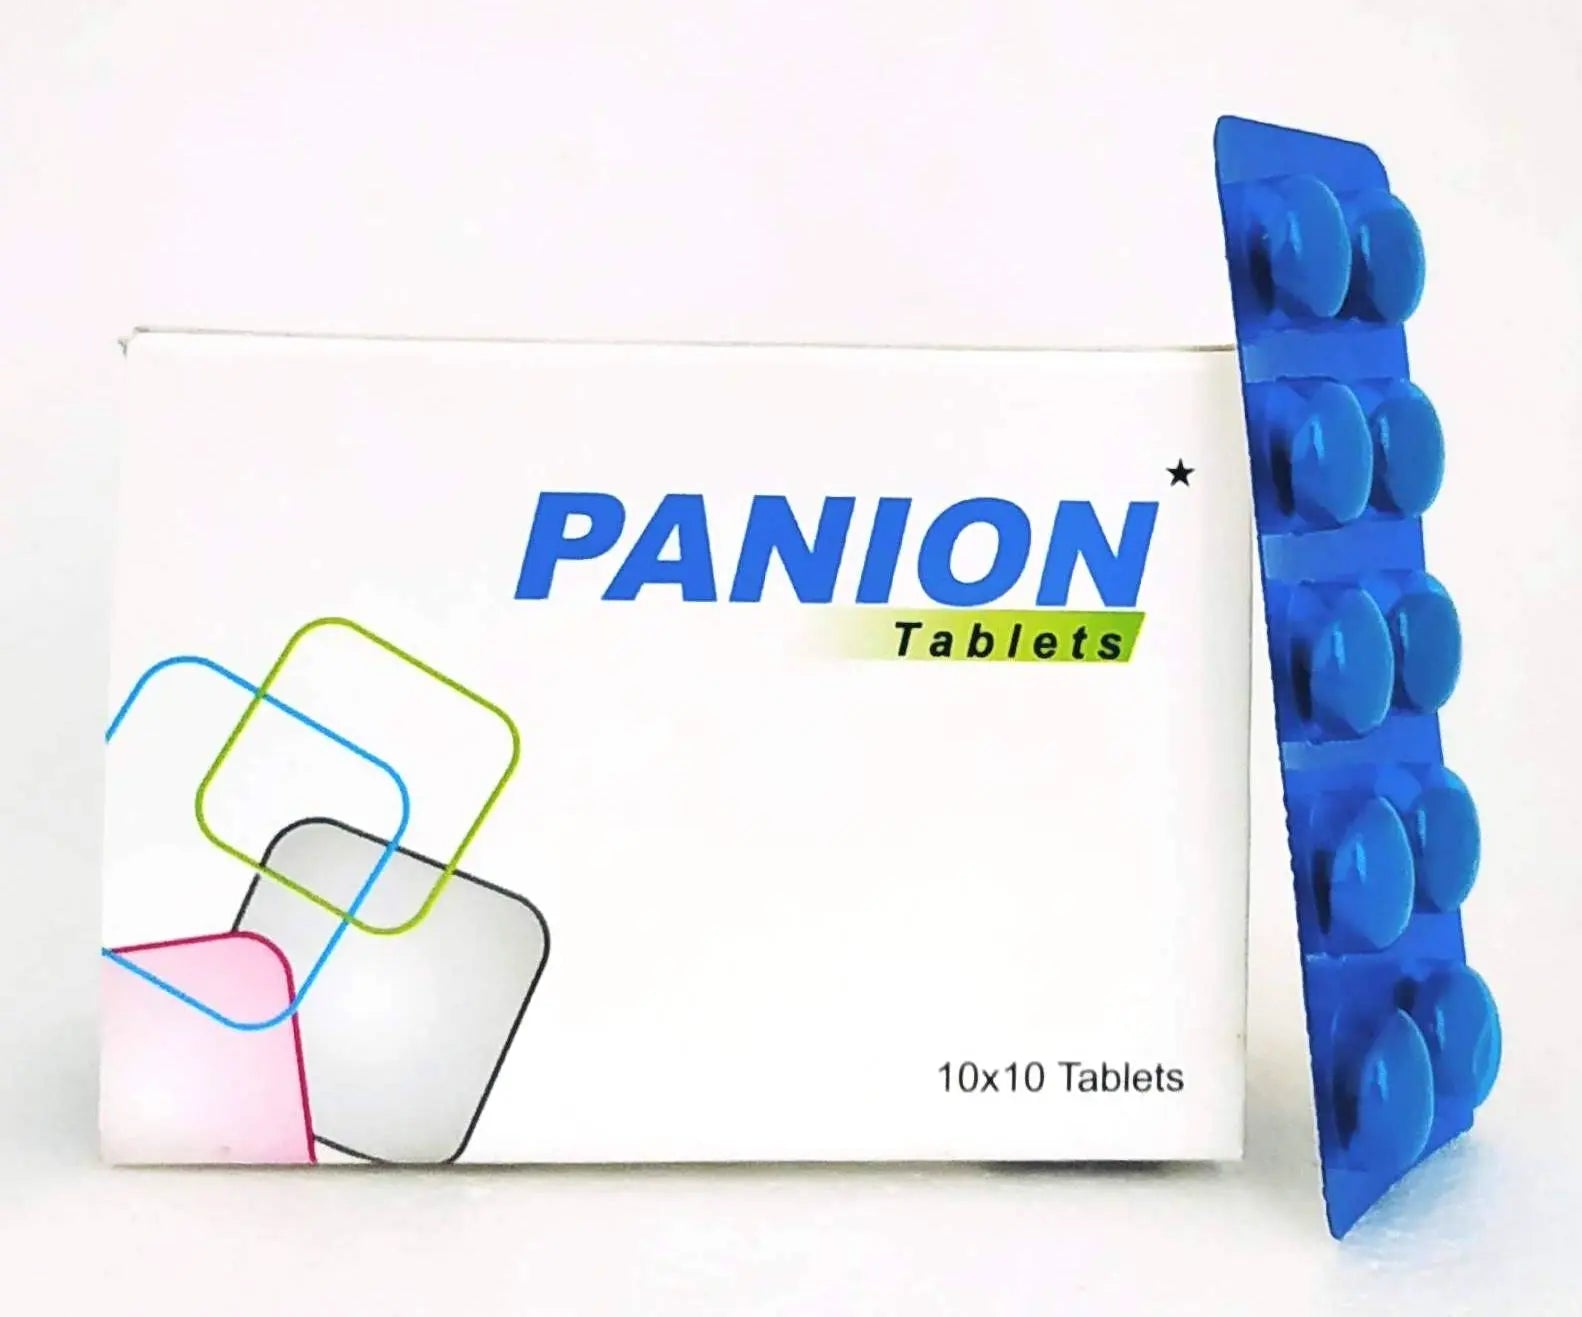 Panion tablets - 10Tablets Wintrust